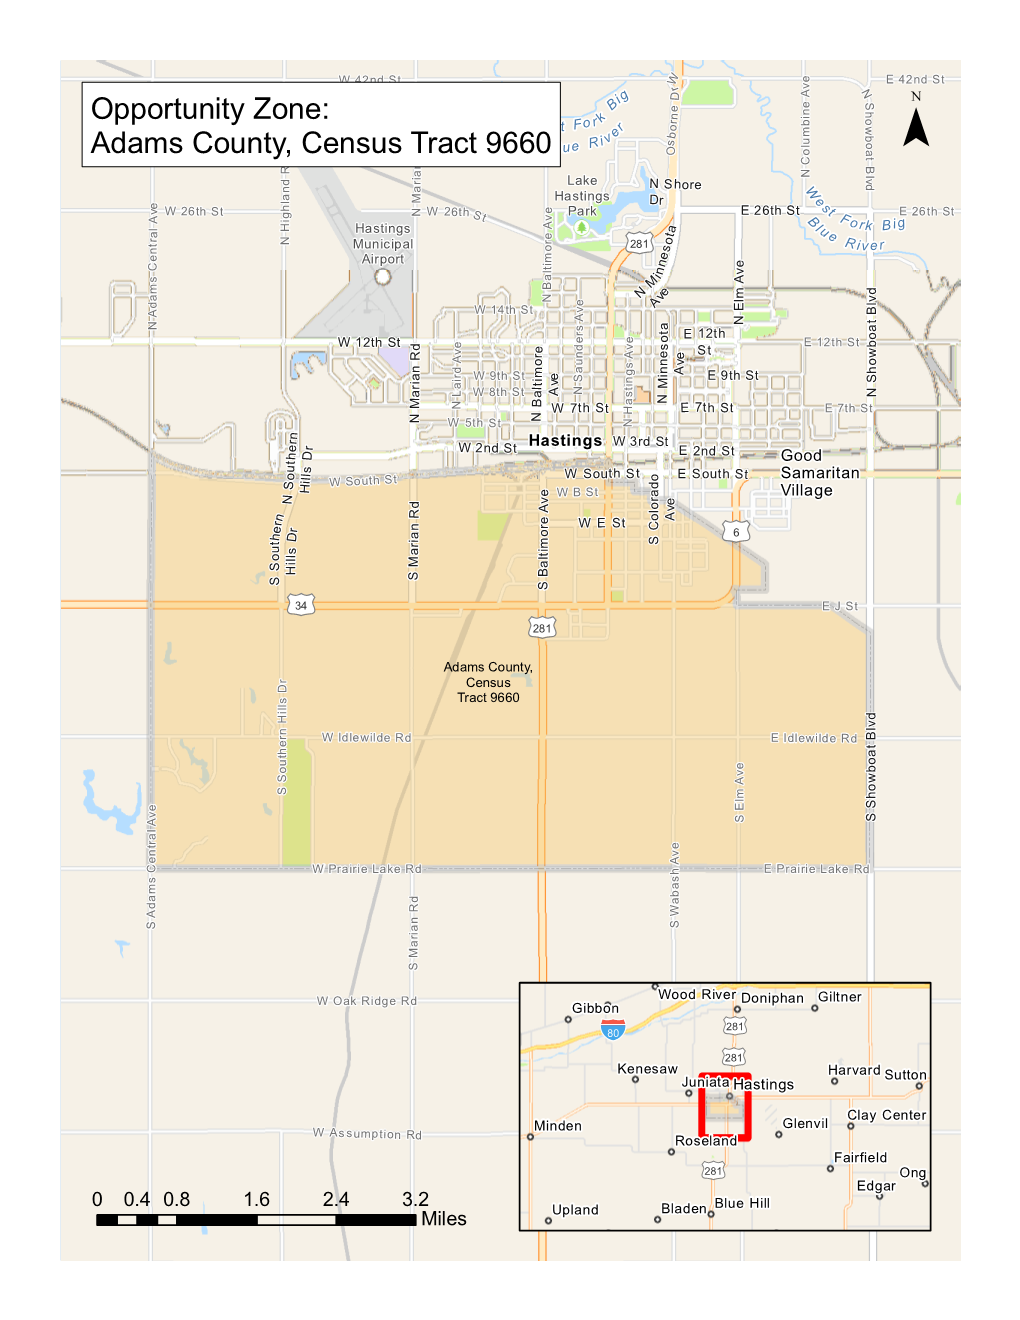 Nebraska Opportunity Zone: Adams County, Census Tract 9660